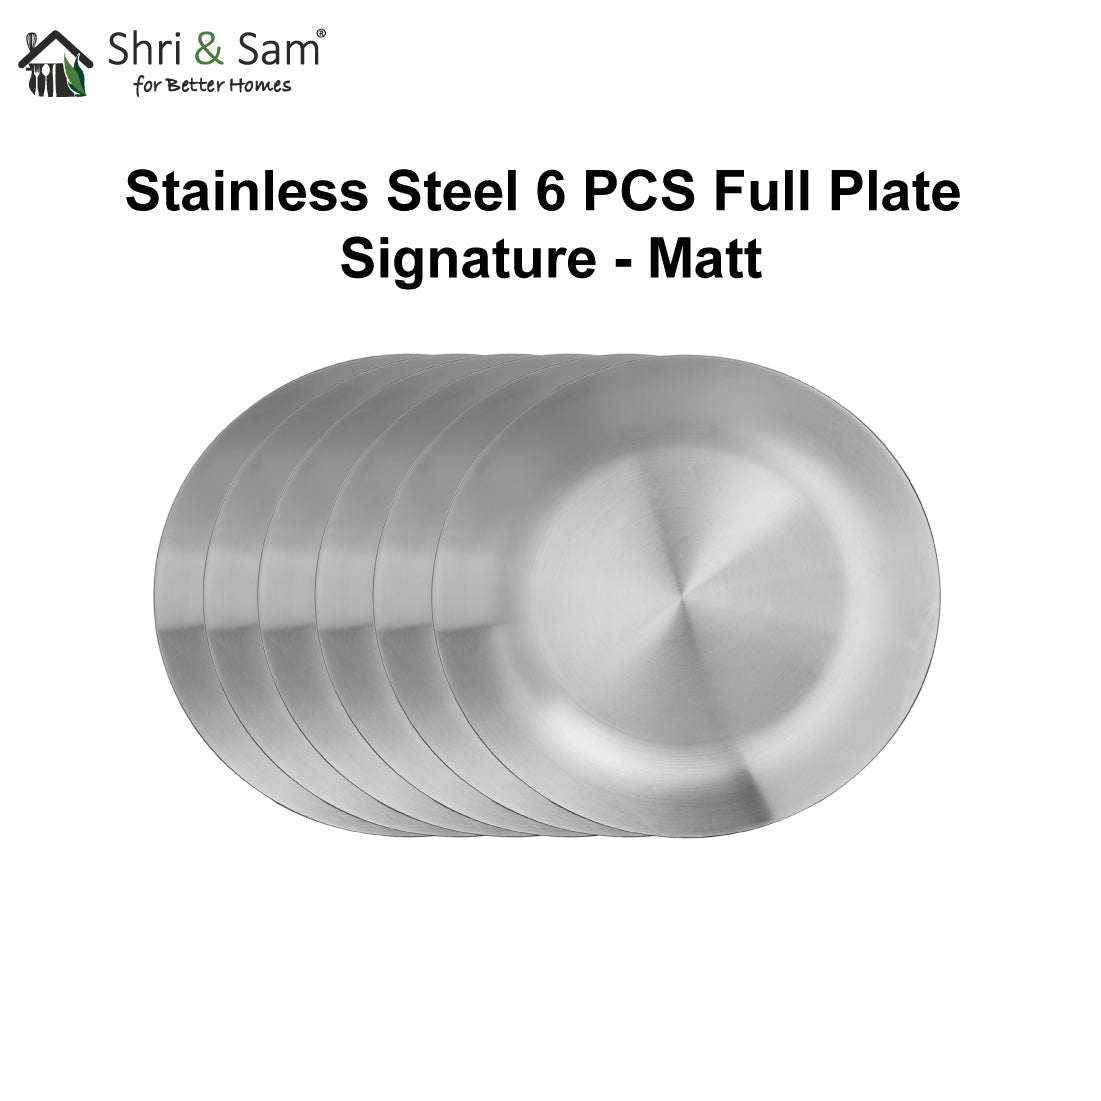 Stainless Steel 6 PCS Full Plate Signature - Matt